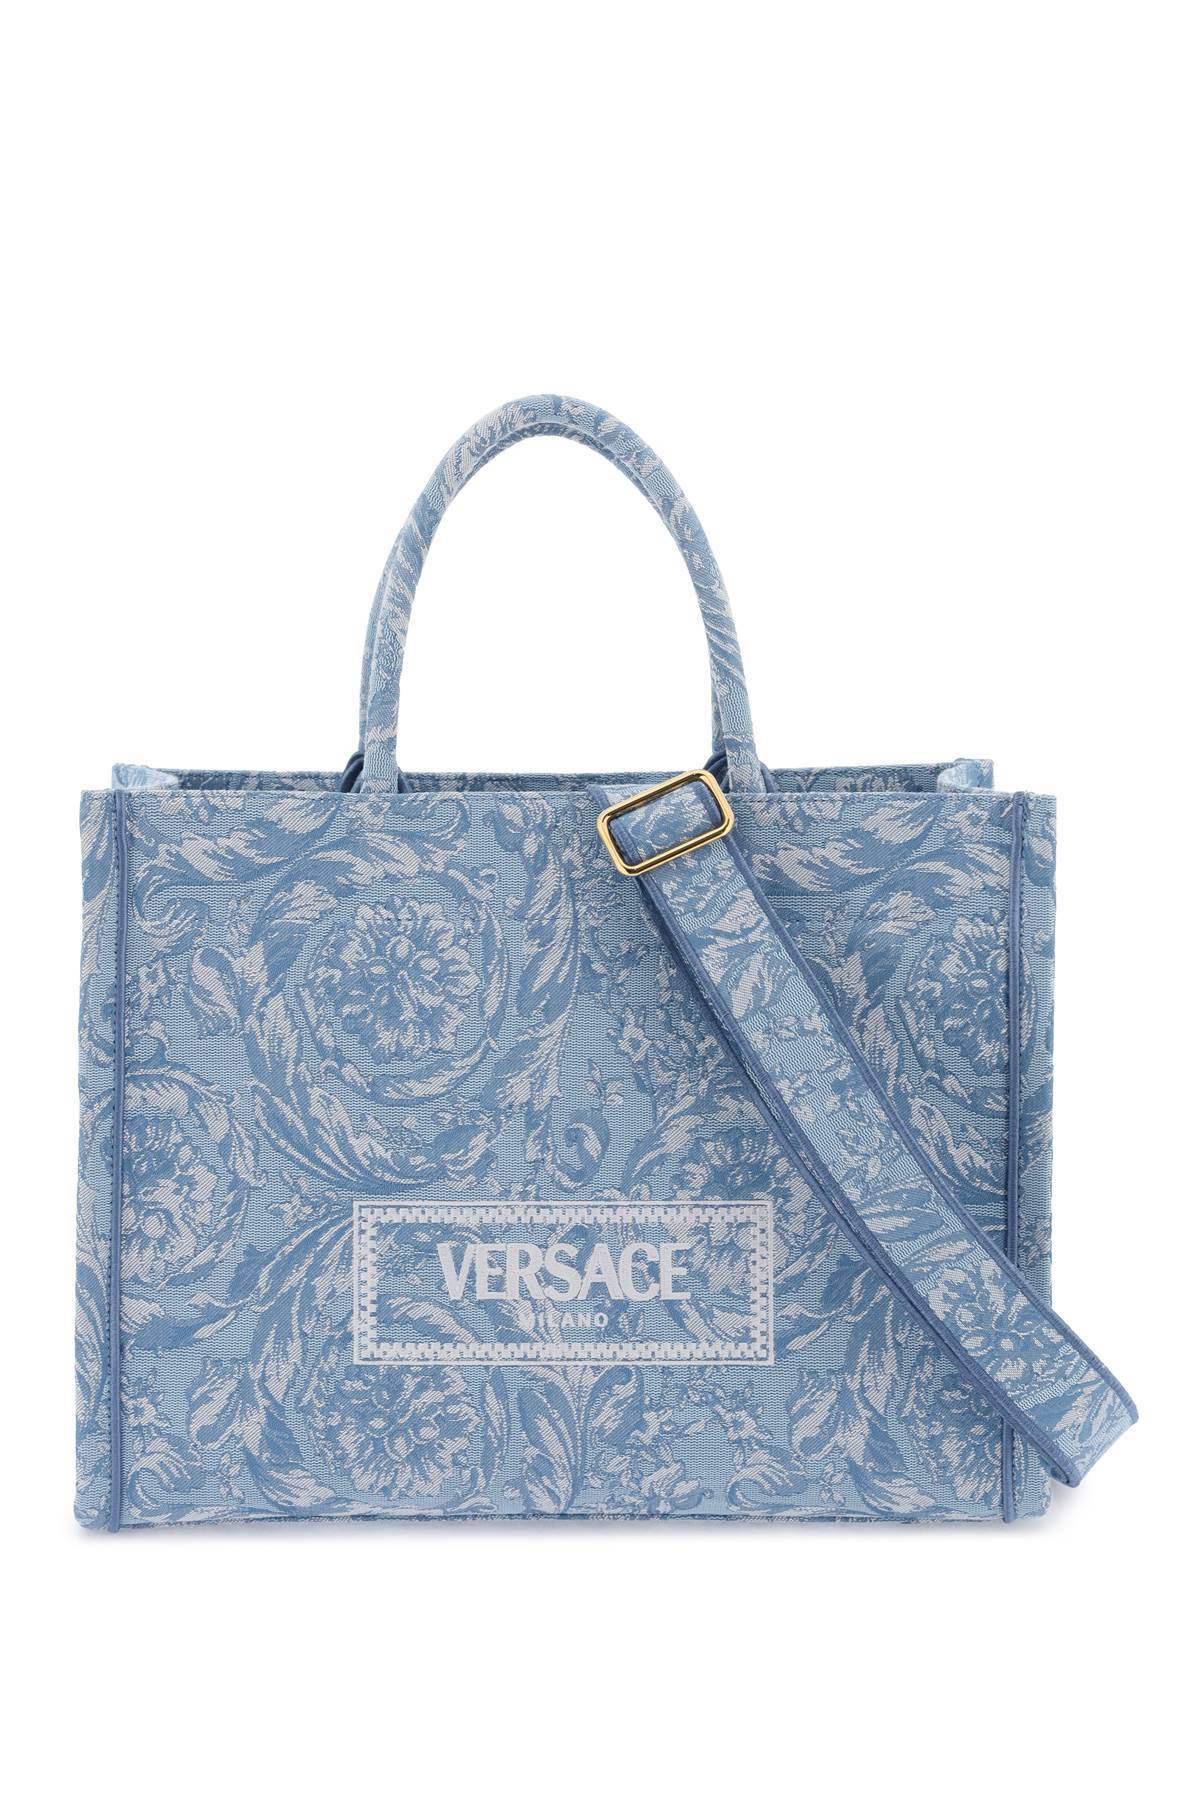 Versace VERSACE athena barocco tote bag